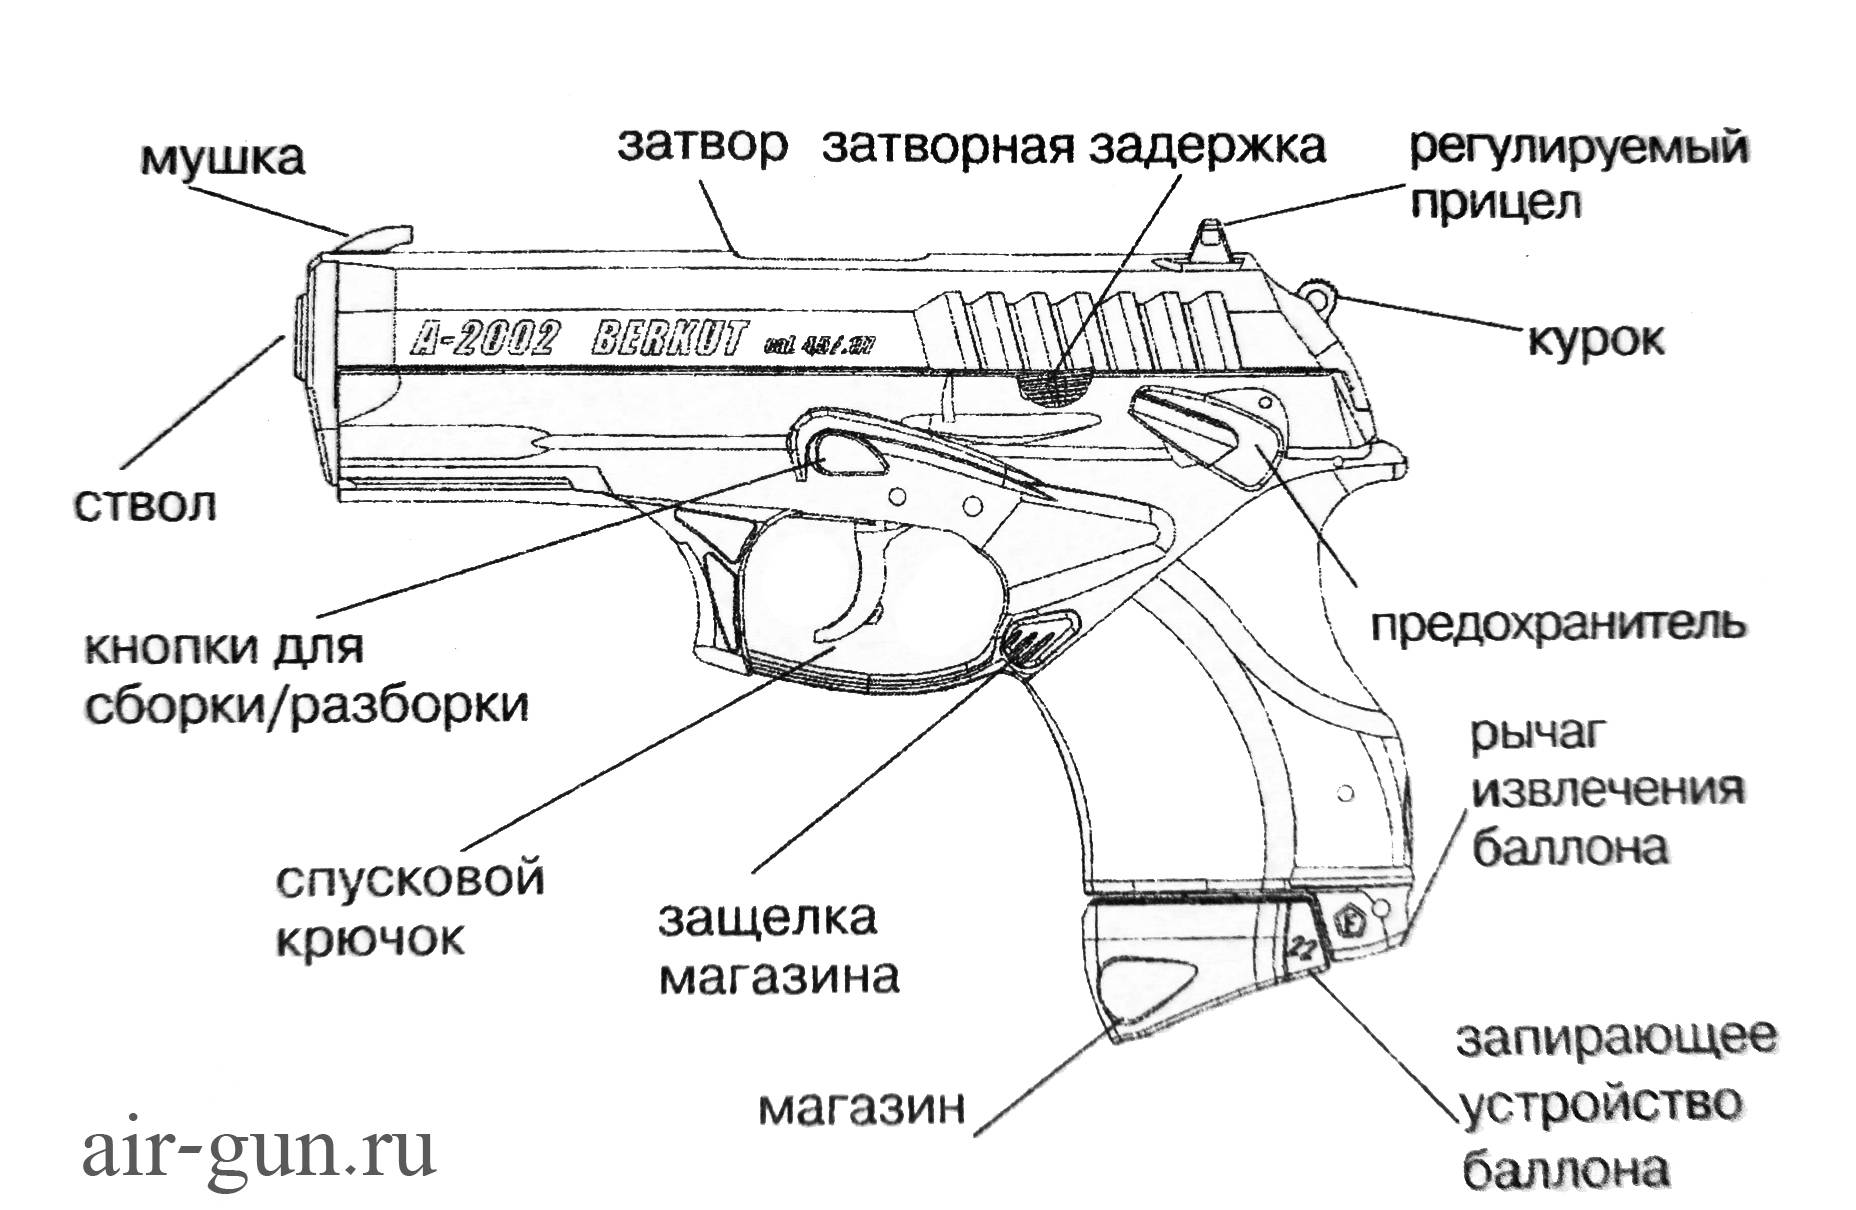 Назовите части оружия. Строение пневматического пистолета ПМ. Разбор пневматического пистолета а 2002 Беркут. Конструкция пневматического пистолета 17.